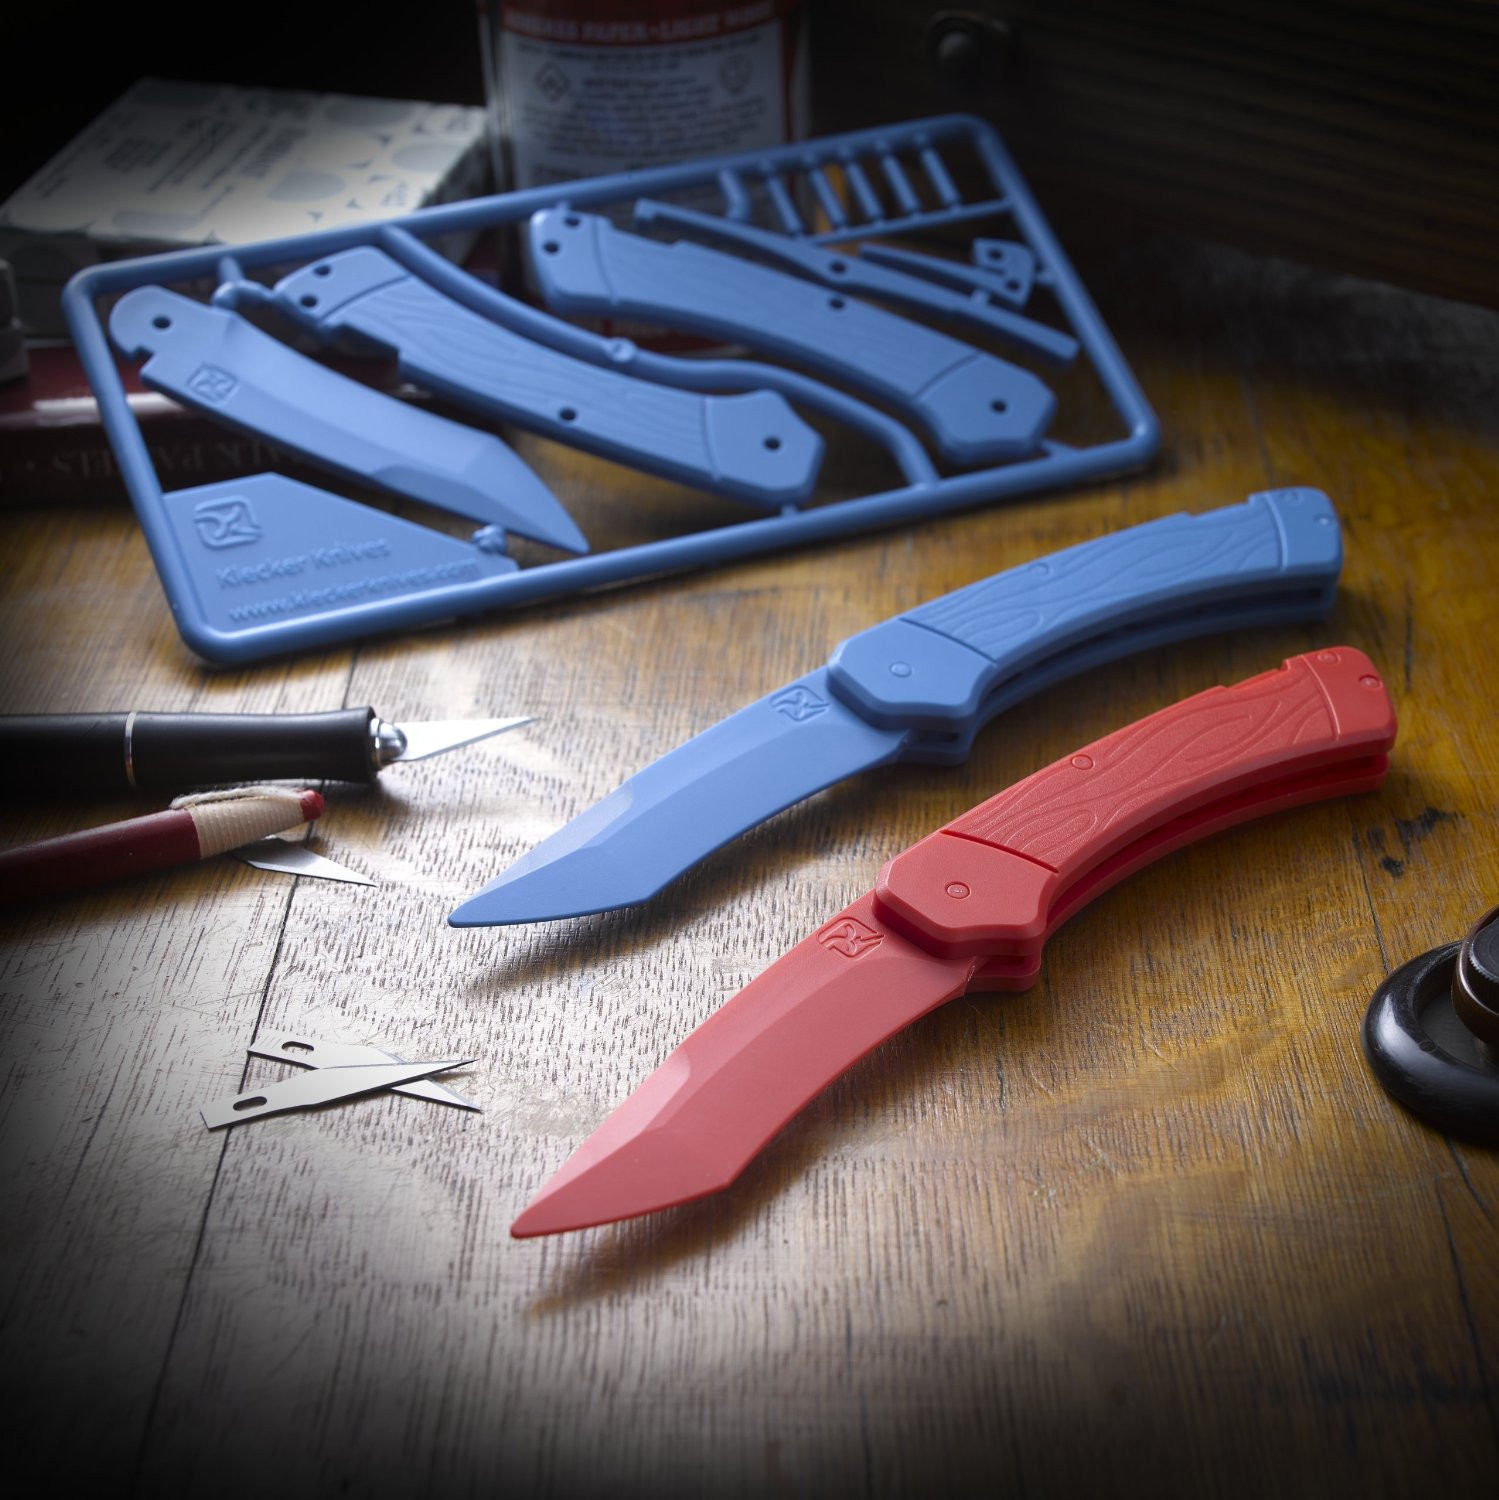 Best ideas about DIY Knife Kit
. Save or Pin DIY Trigger Knife Kit NoveltyStreet Now.